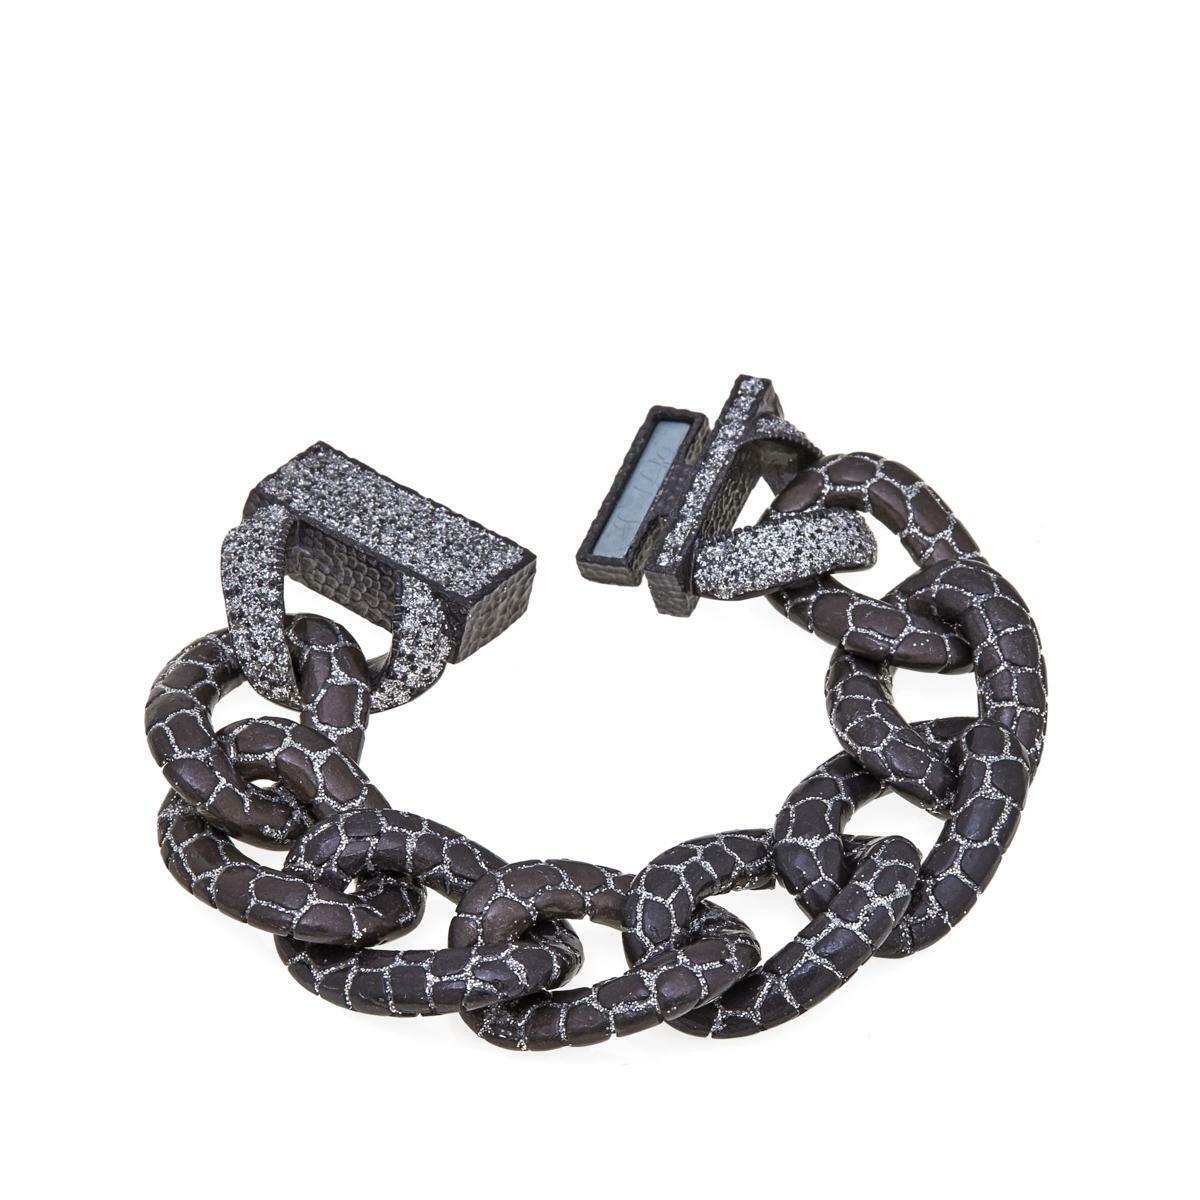 Kmo Paris Tortoise Shell-Design Curb Link 7-1/4" Bracelet Hsn $212